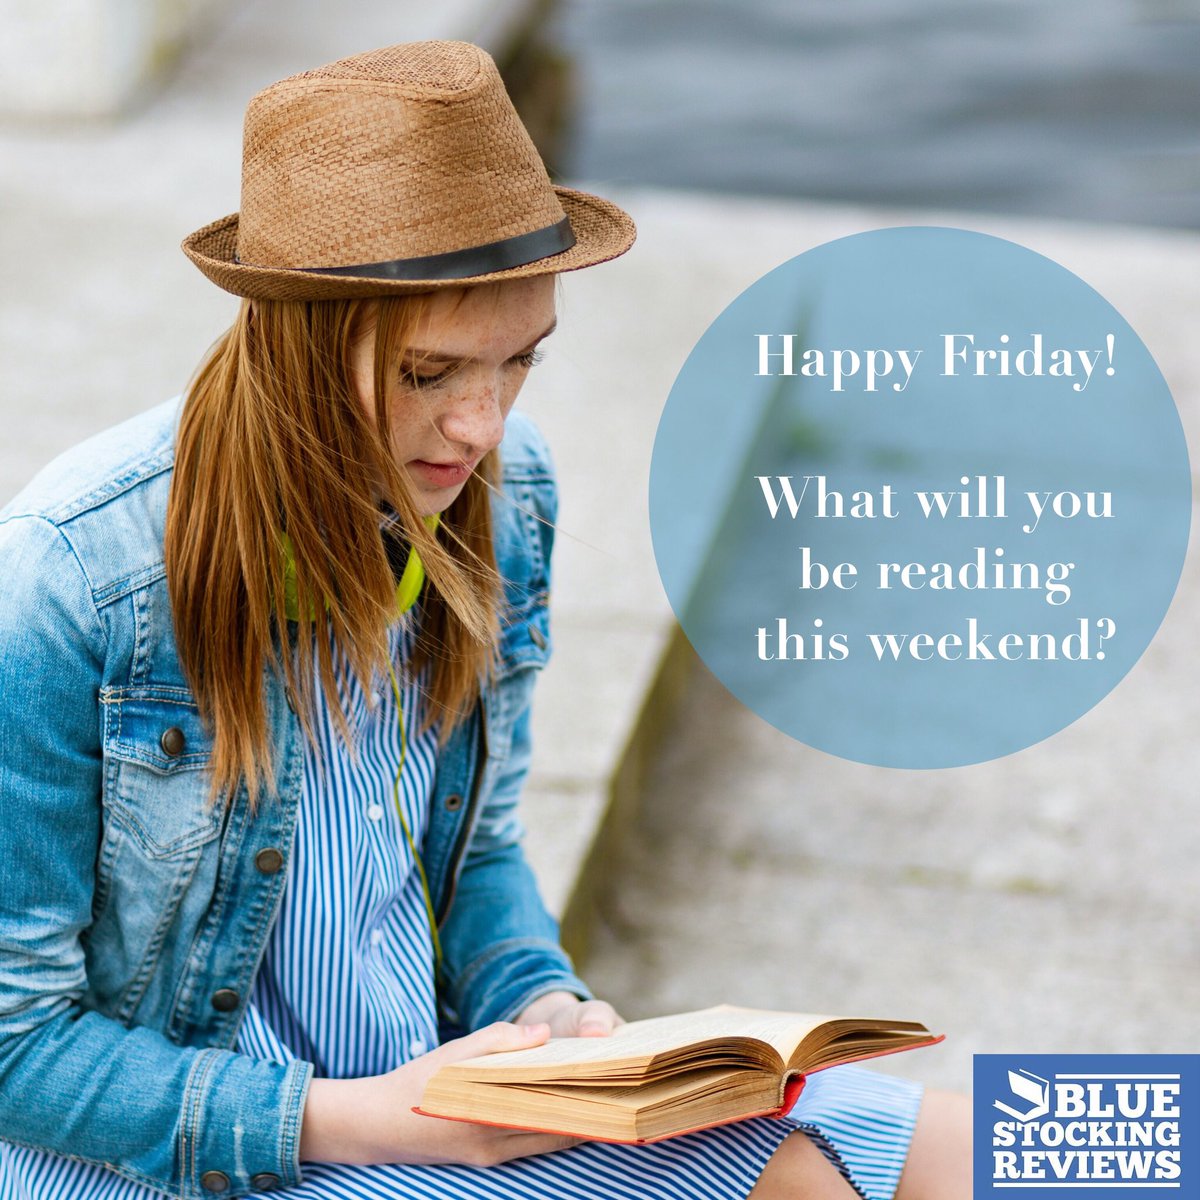 Happy Friday!  What are you reading this weekend? #bluestockingreviews #readitloveit #readingisfun #readitshareit